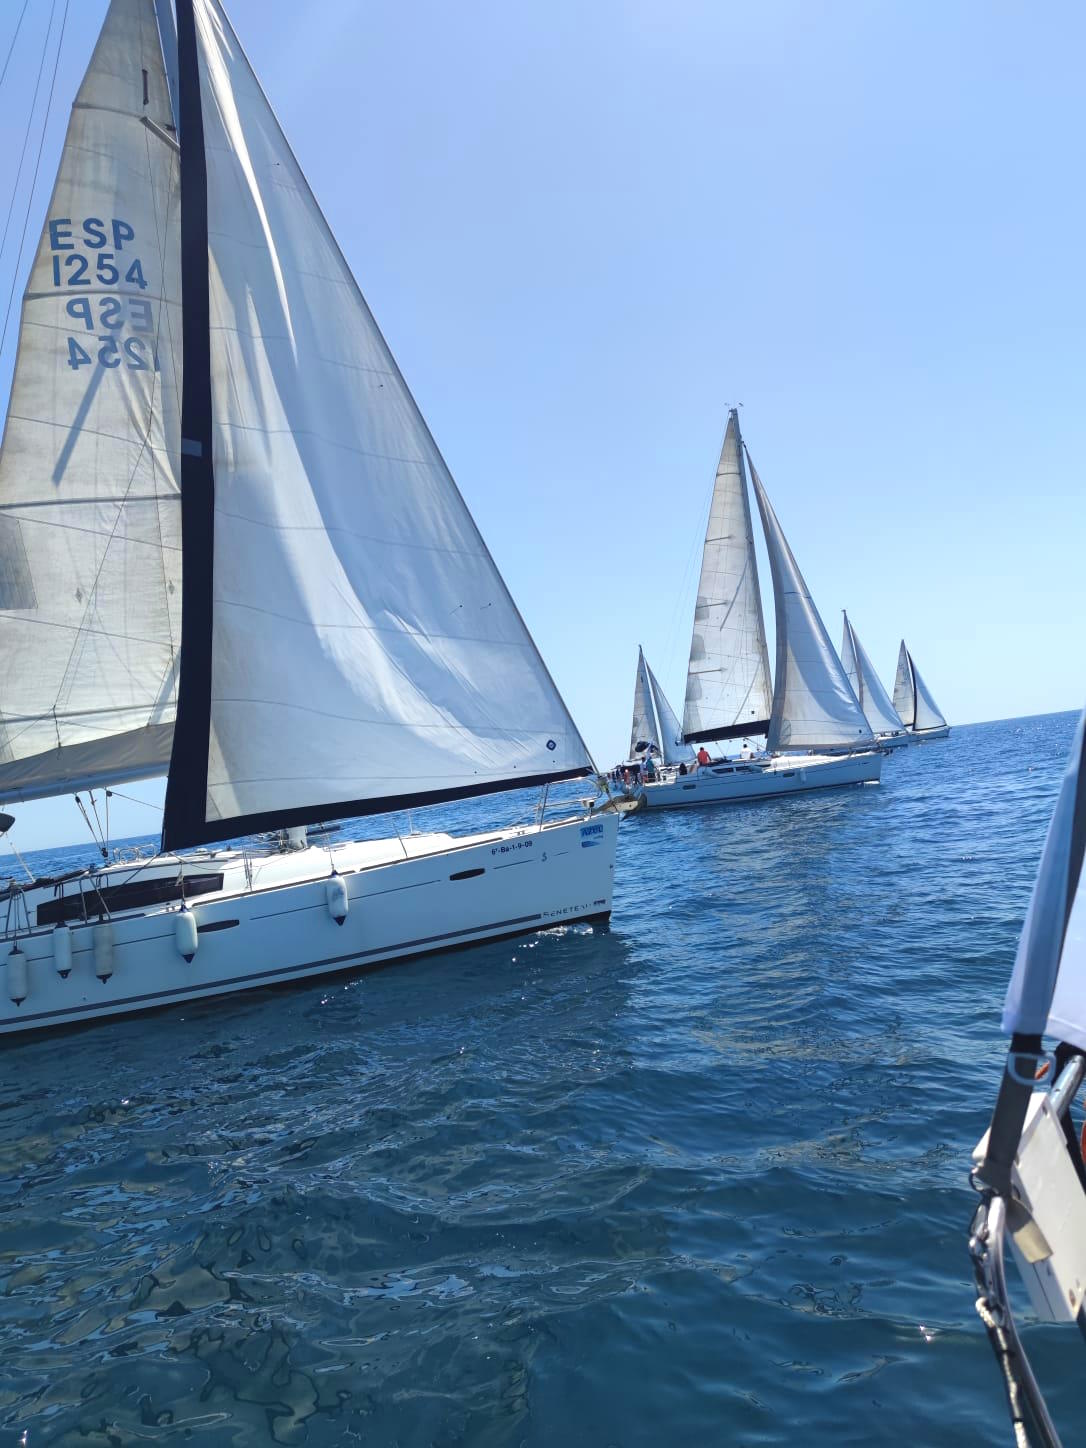 Starting the sailing regatta event in Barcelona 